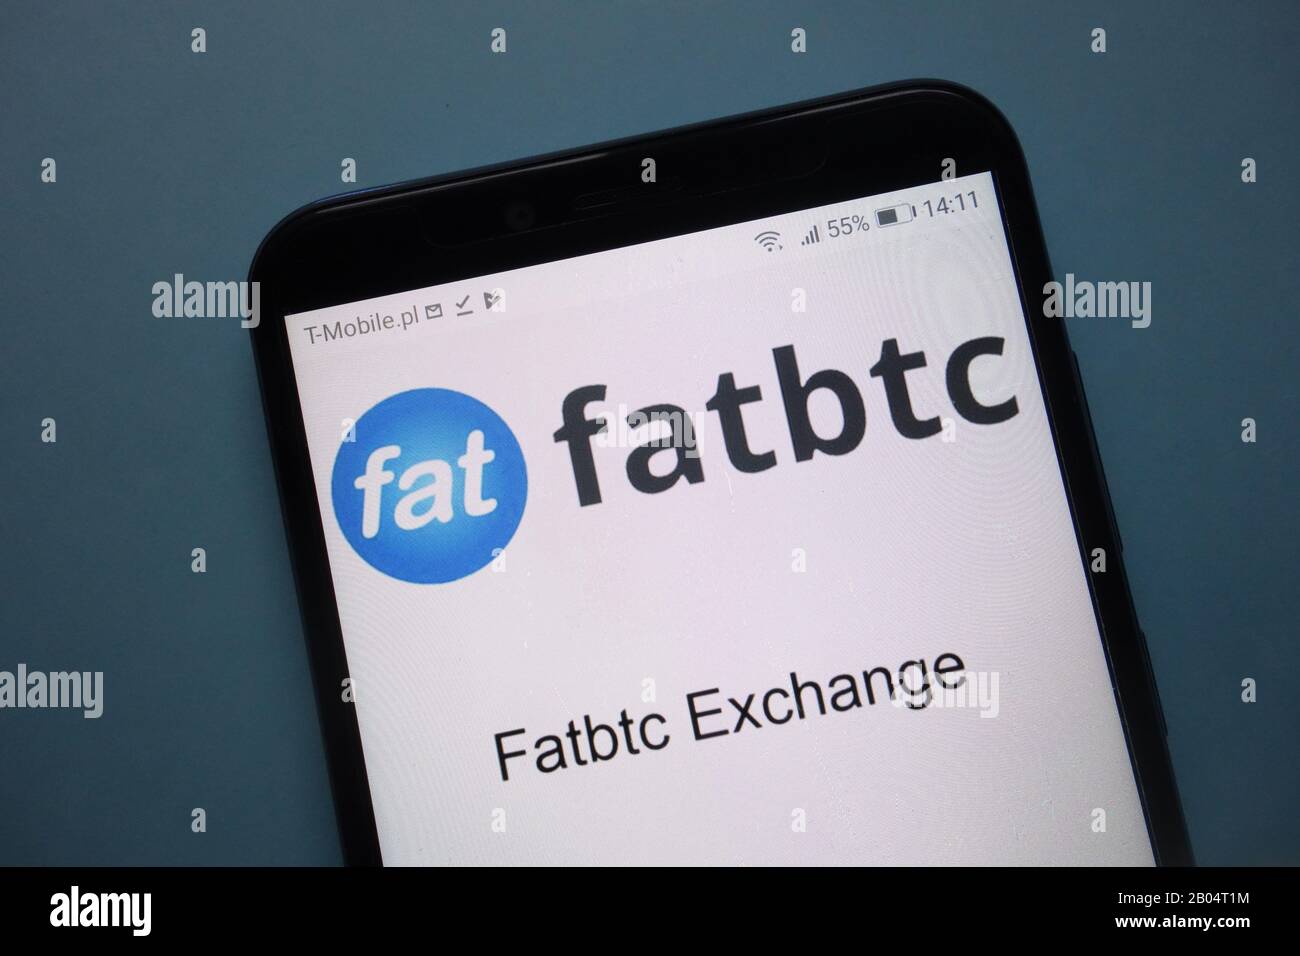 Fatbtc cryptocurrency exchange logo displayed on smartphone Stock Photo